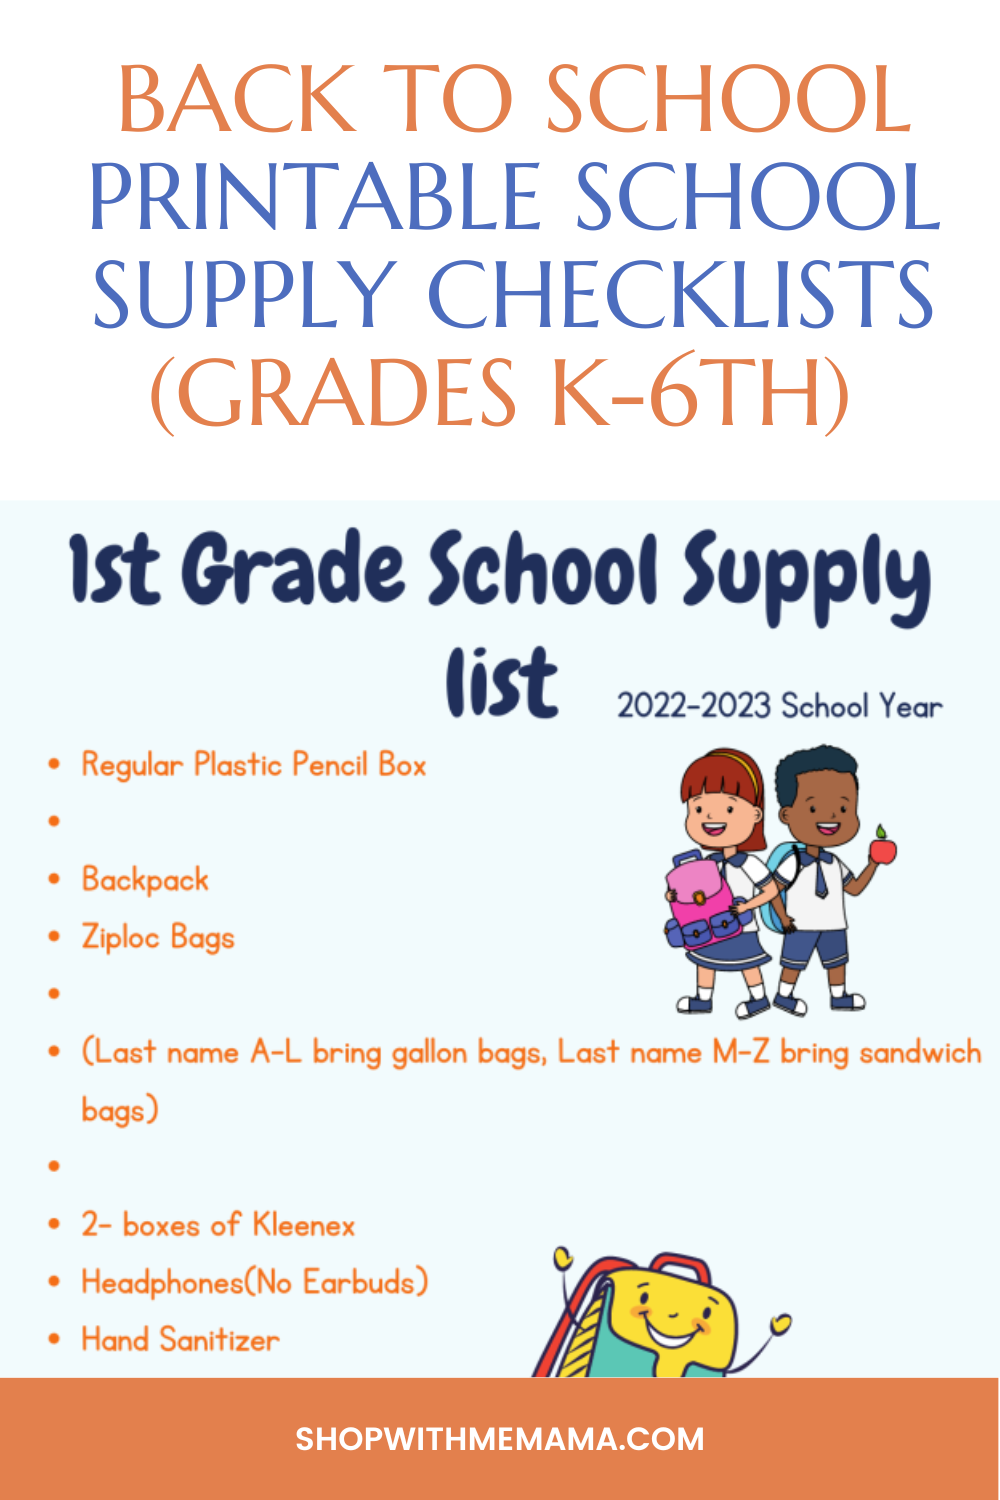 Back to School Printable school supply list for grades k-6